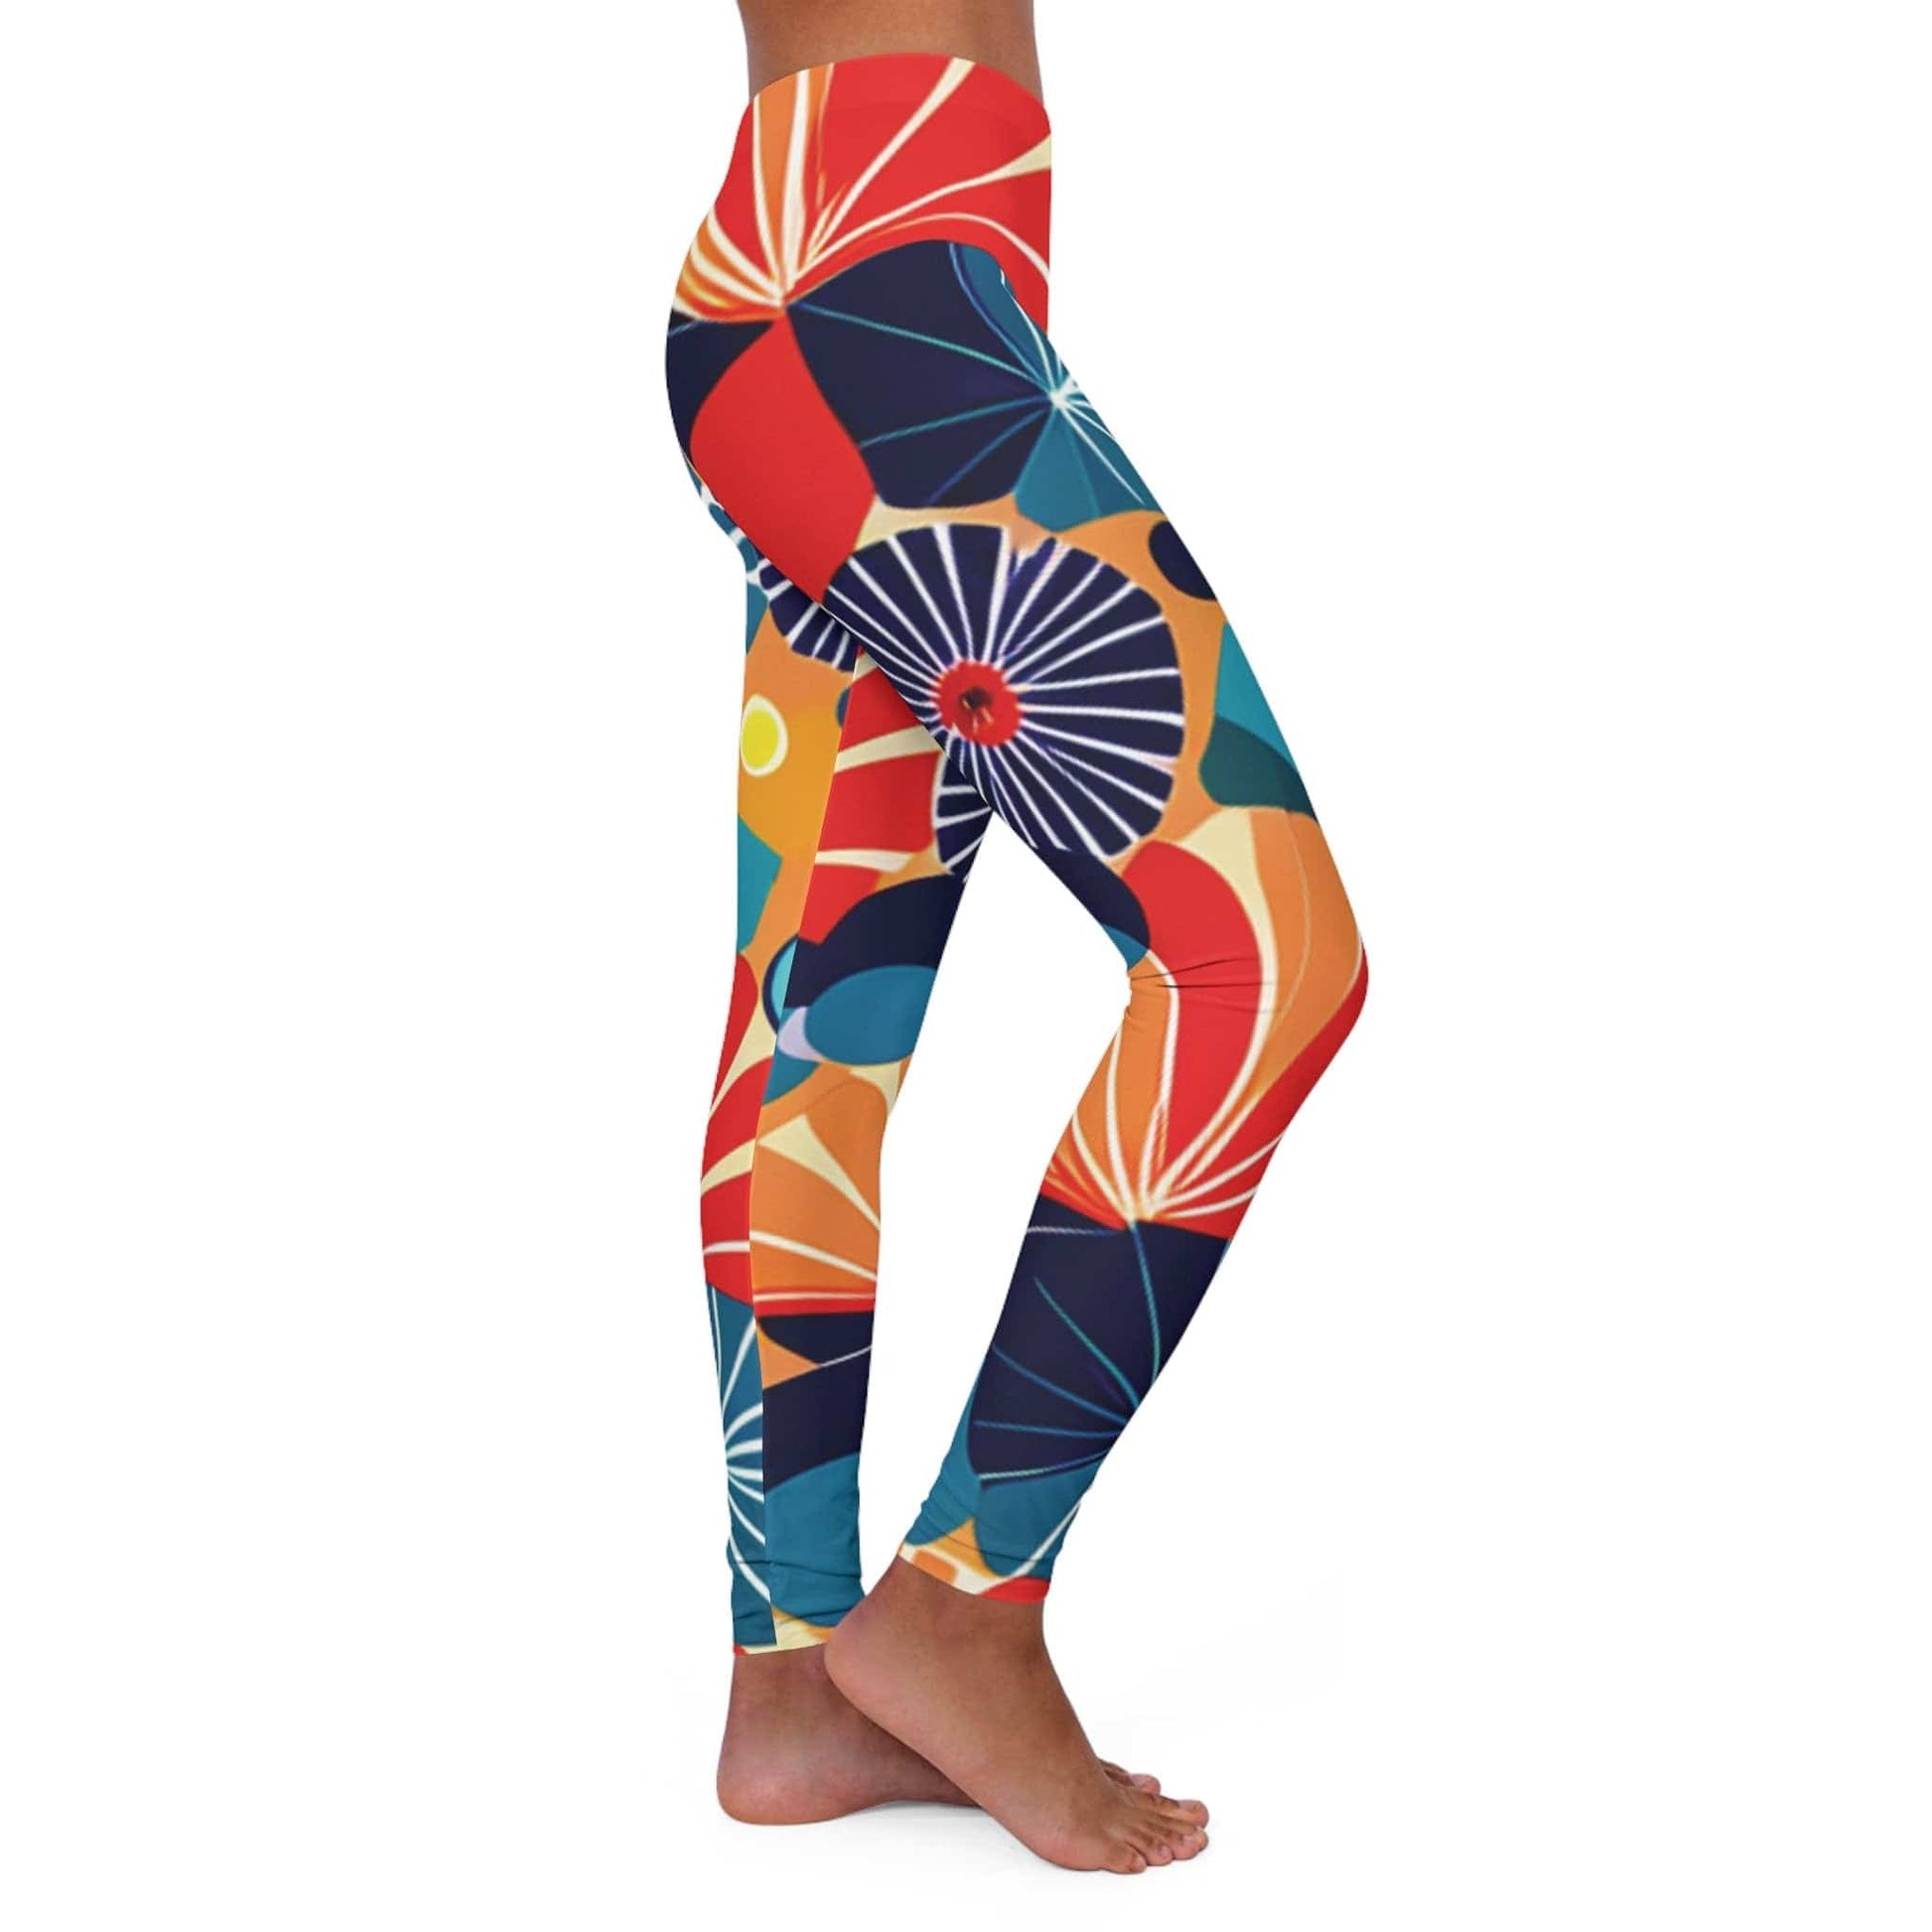 Kate McEnroe New York Retro Geometric Pattern Leggings - Stretchy Skinny Fit with Bold Mid-Century Colors Leggings